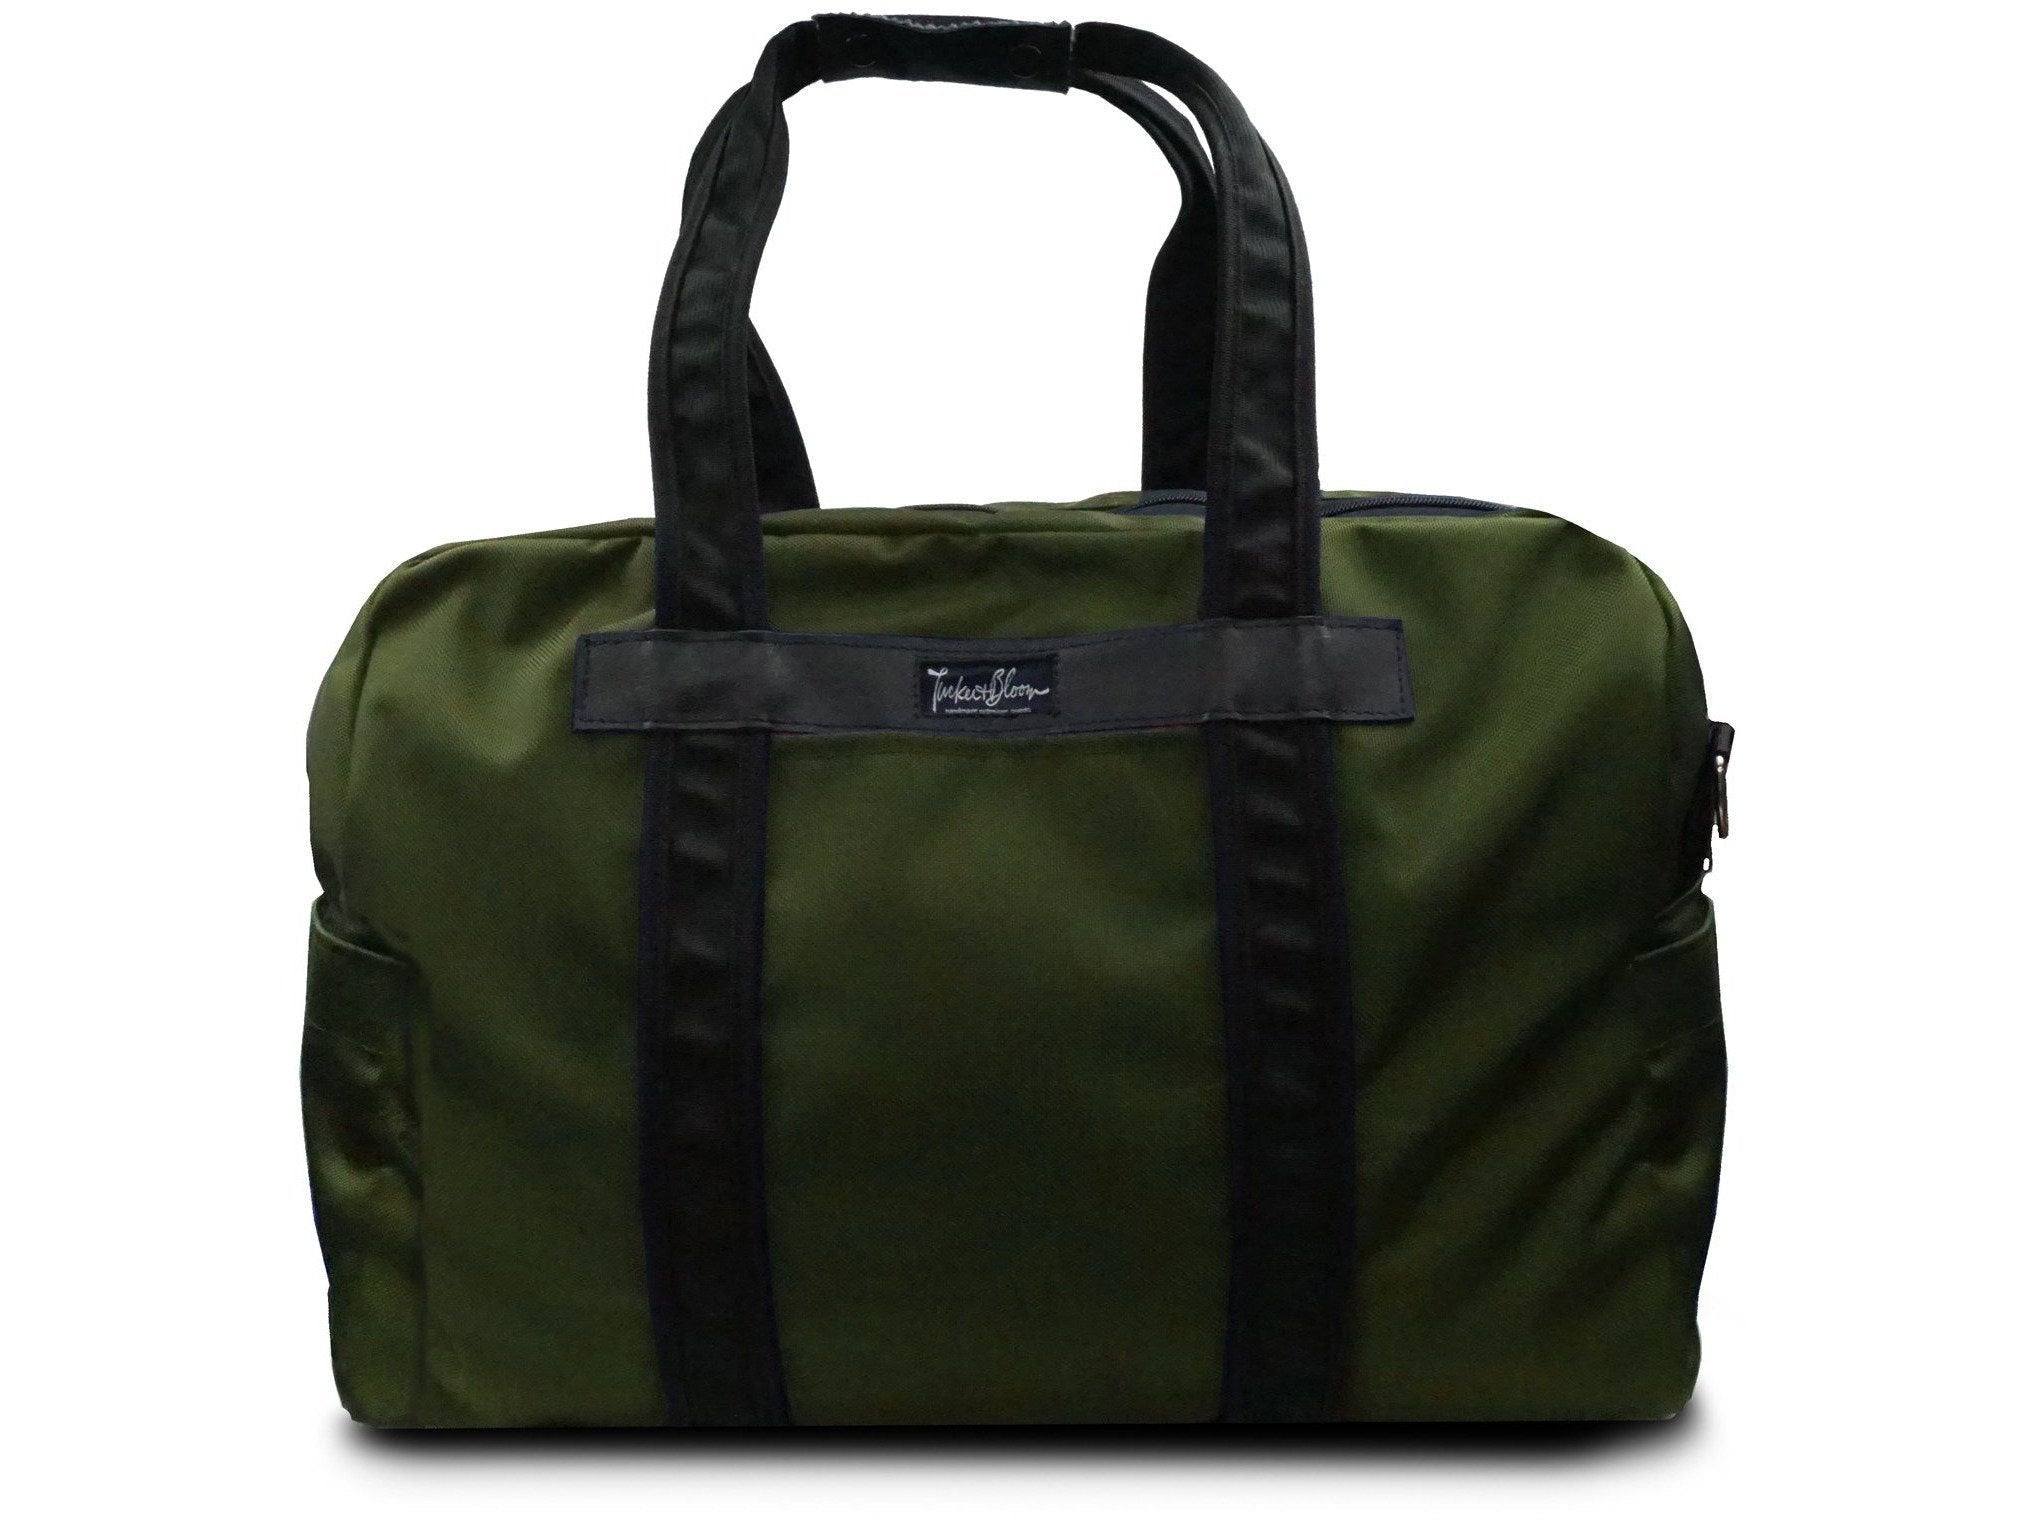 London Duffel Bag. Made in USA